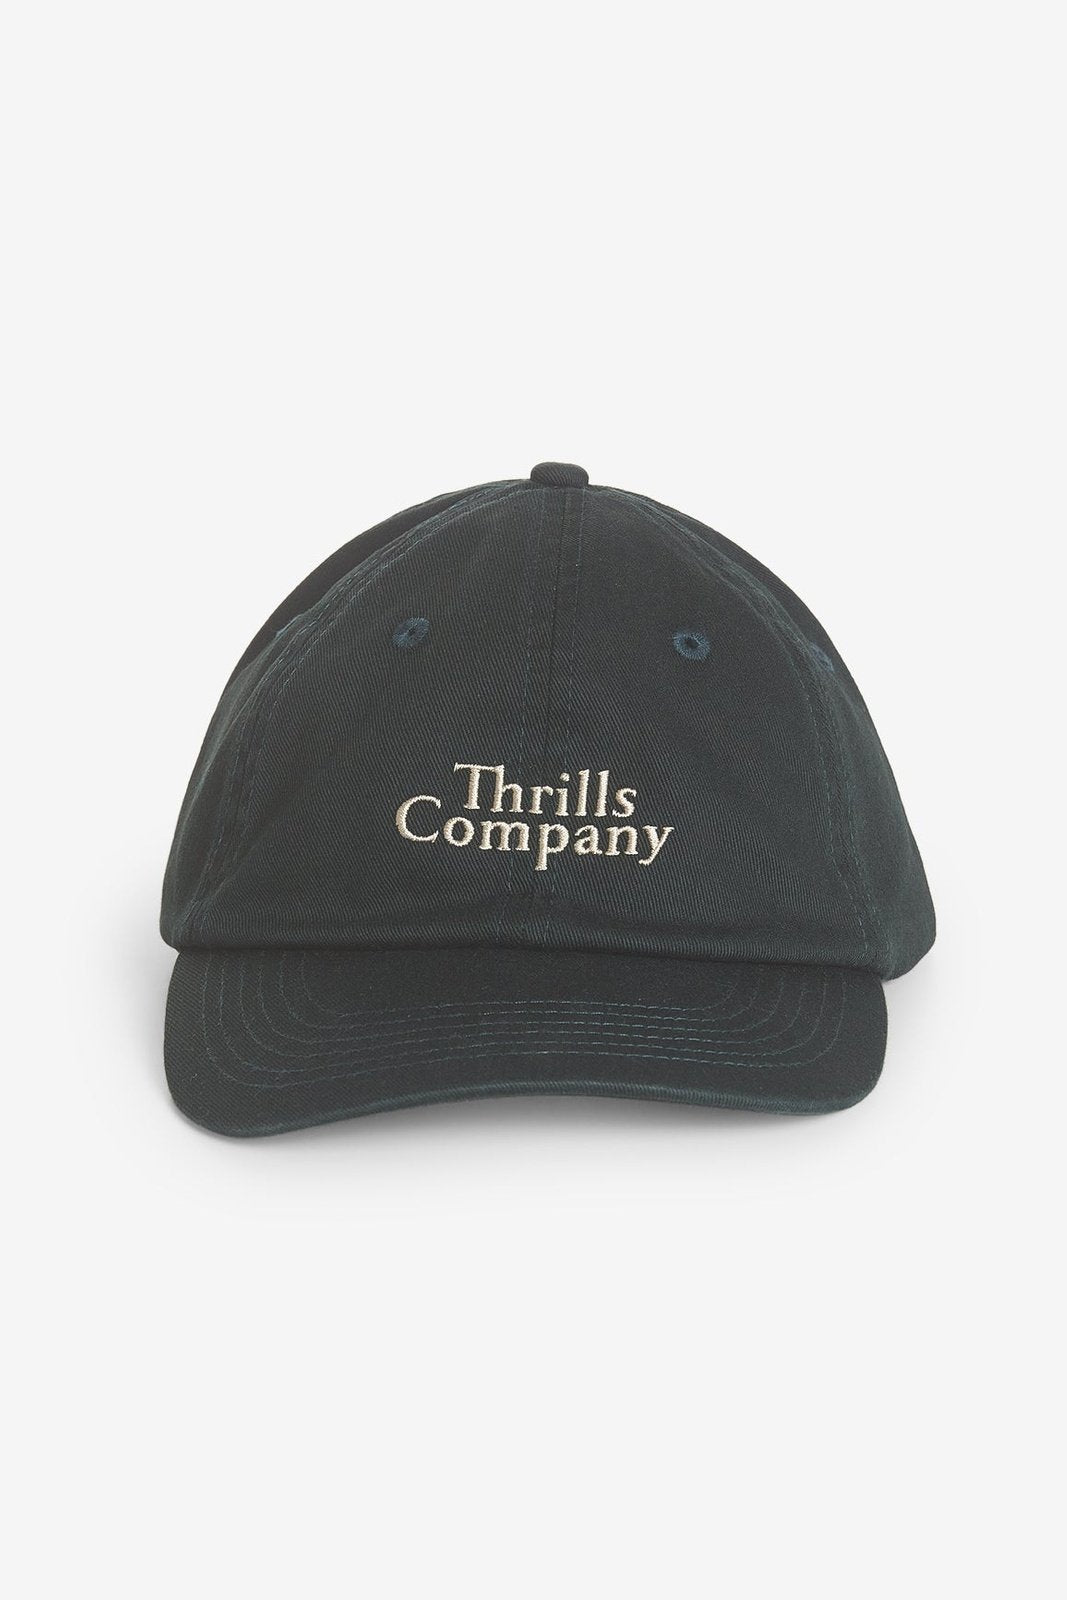 THRILLS Company 6 panel cap - Dark jade